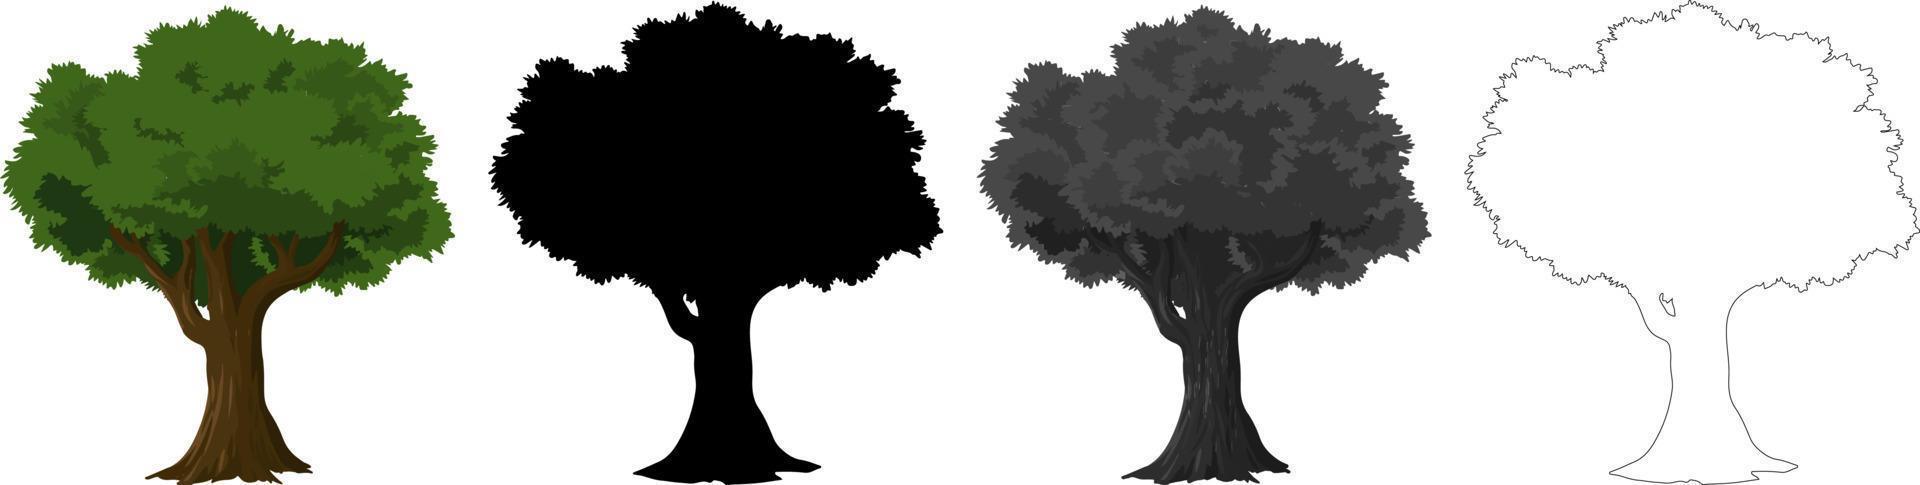 vector de árboles de colección, silueta de árbol, arte de línea de árbol sobre fondo blanco.